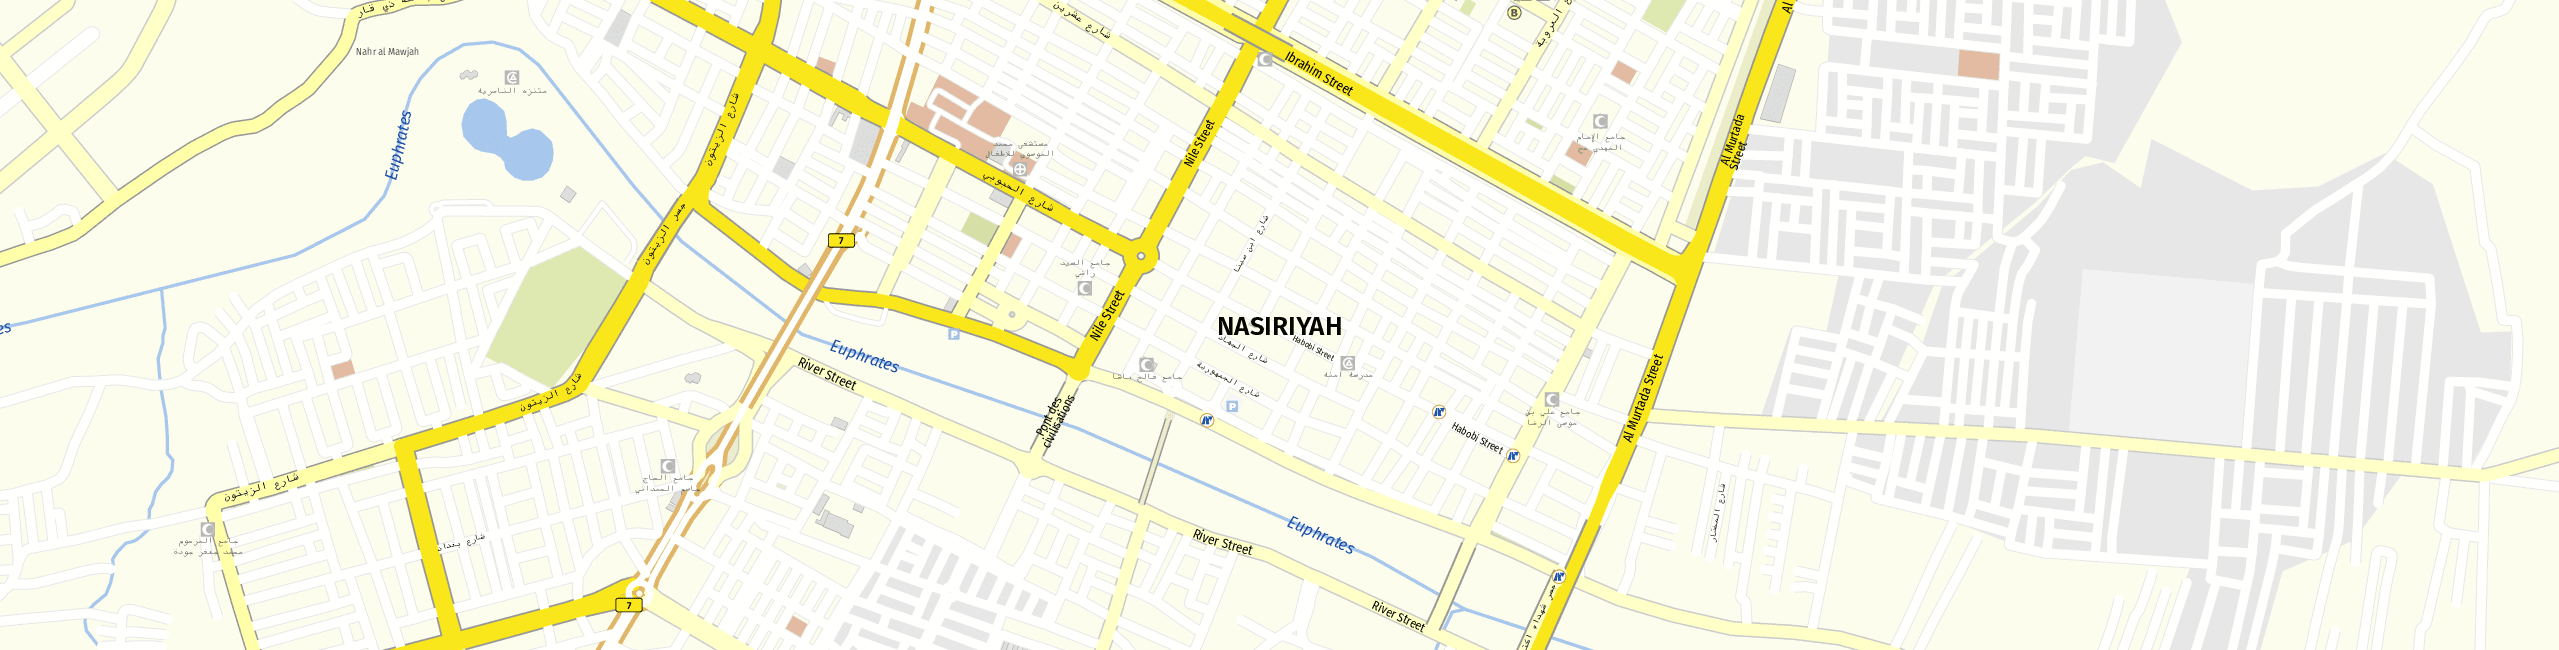 Stadtplan Nasiriya zum Downloaden.